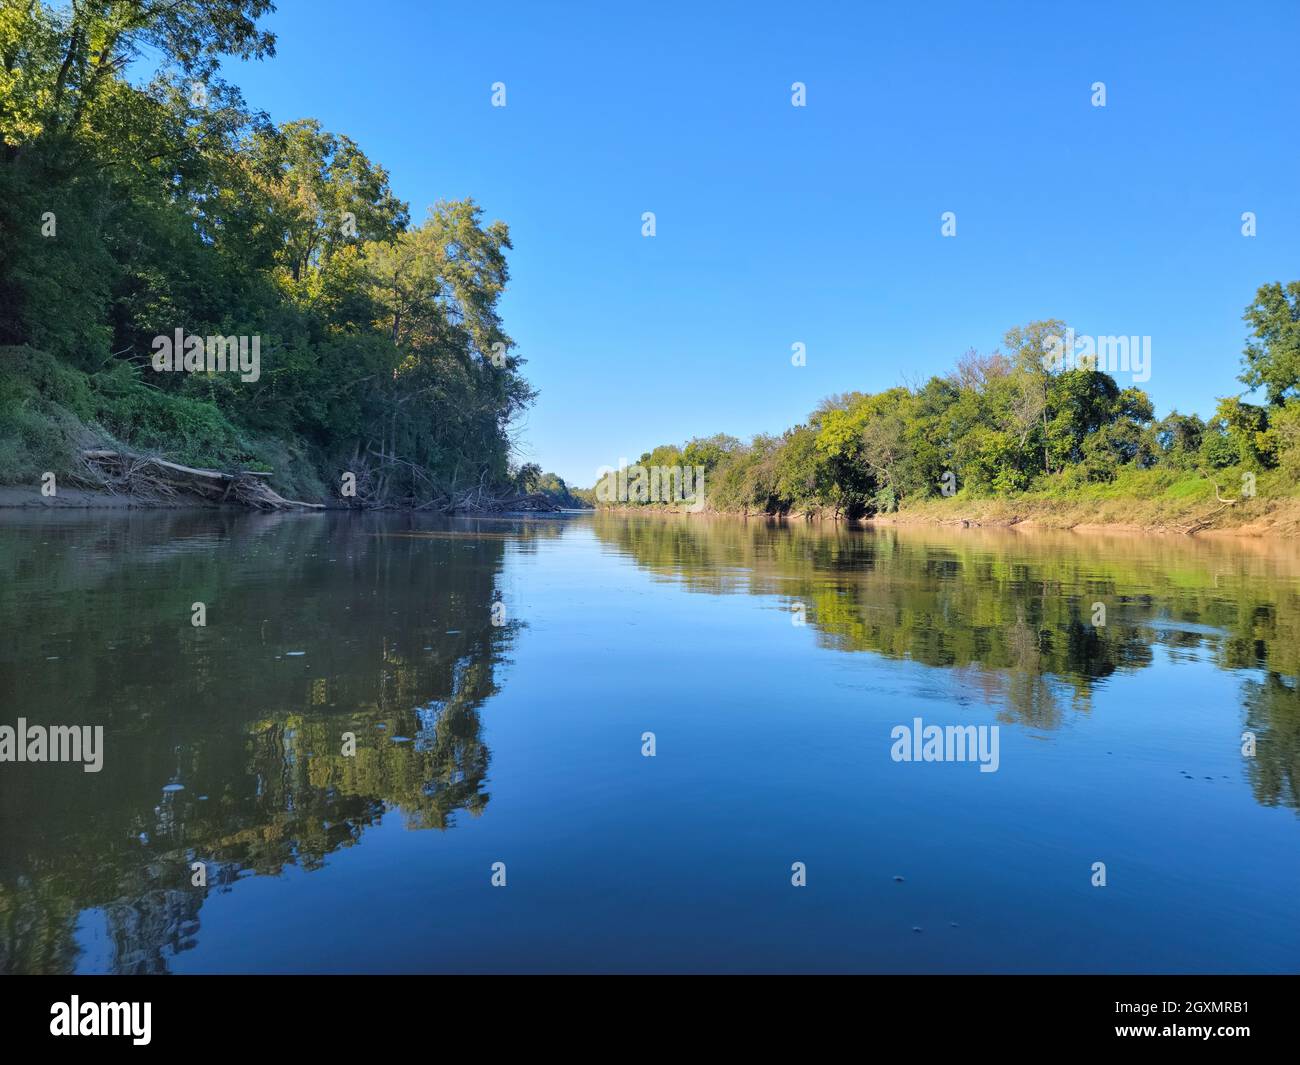 Yadkin River and Blue Sky in North Carolina. Part of the Yadkin-Pee Dee River Basin. Stock Photo